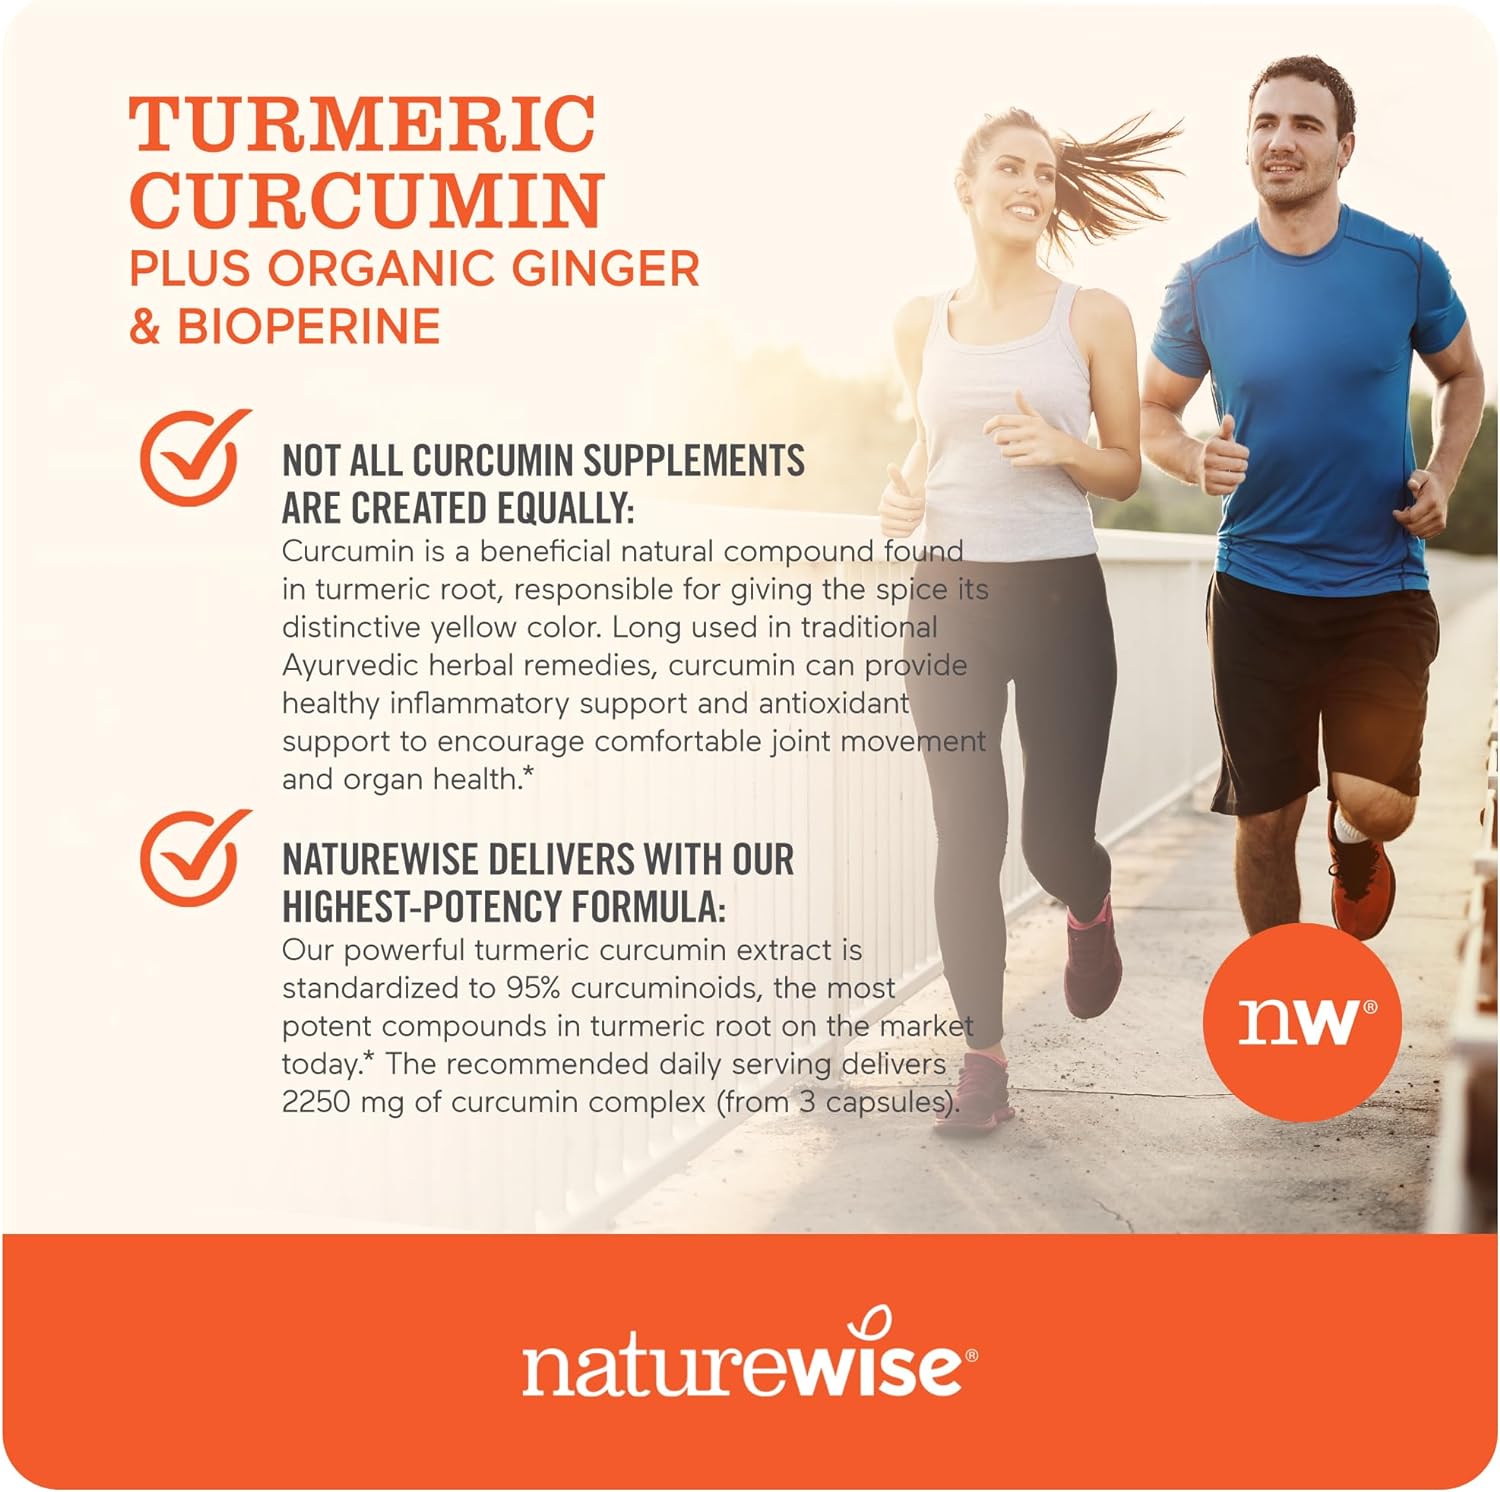 NatureWise Curcumin Turmeric 2250mg 95% Curcuminoids & BioPerine Black